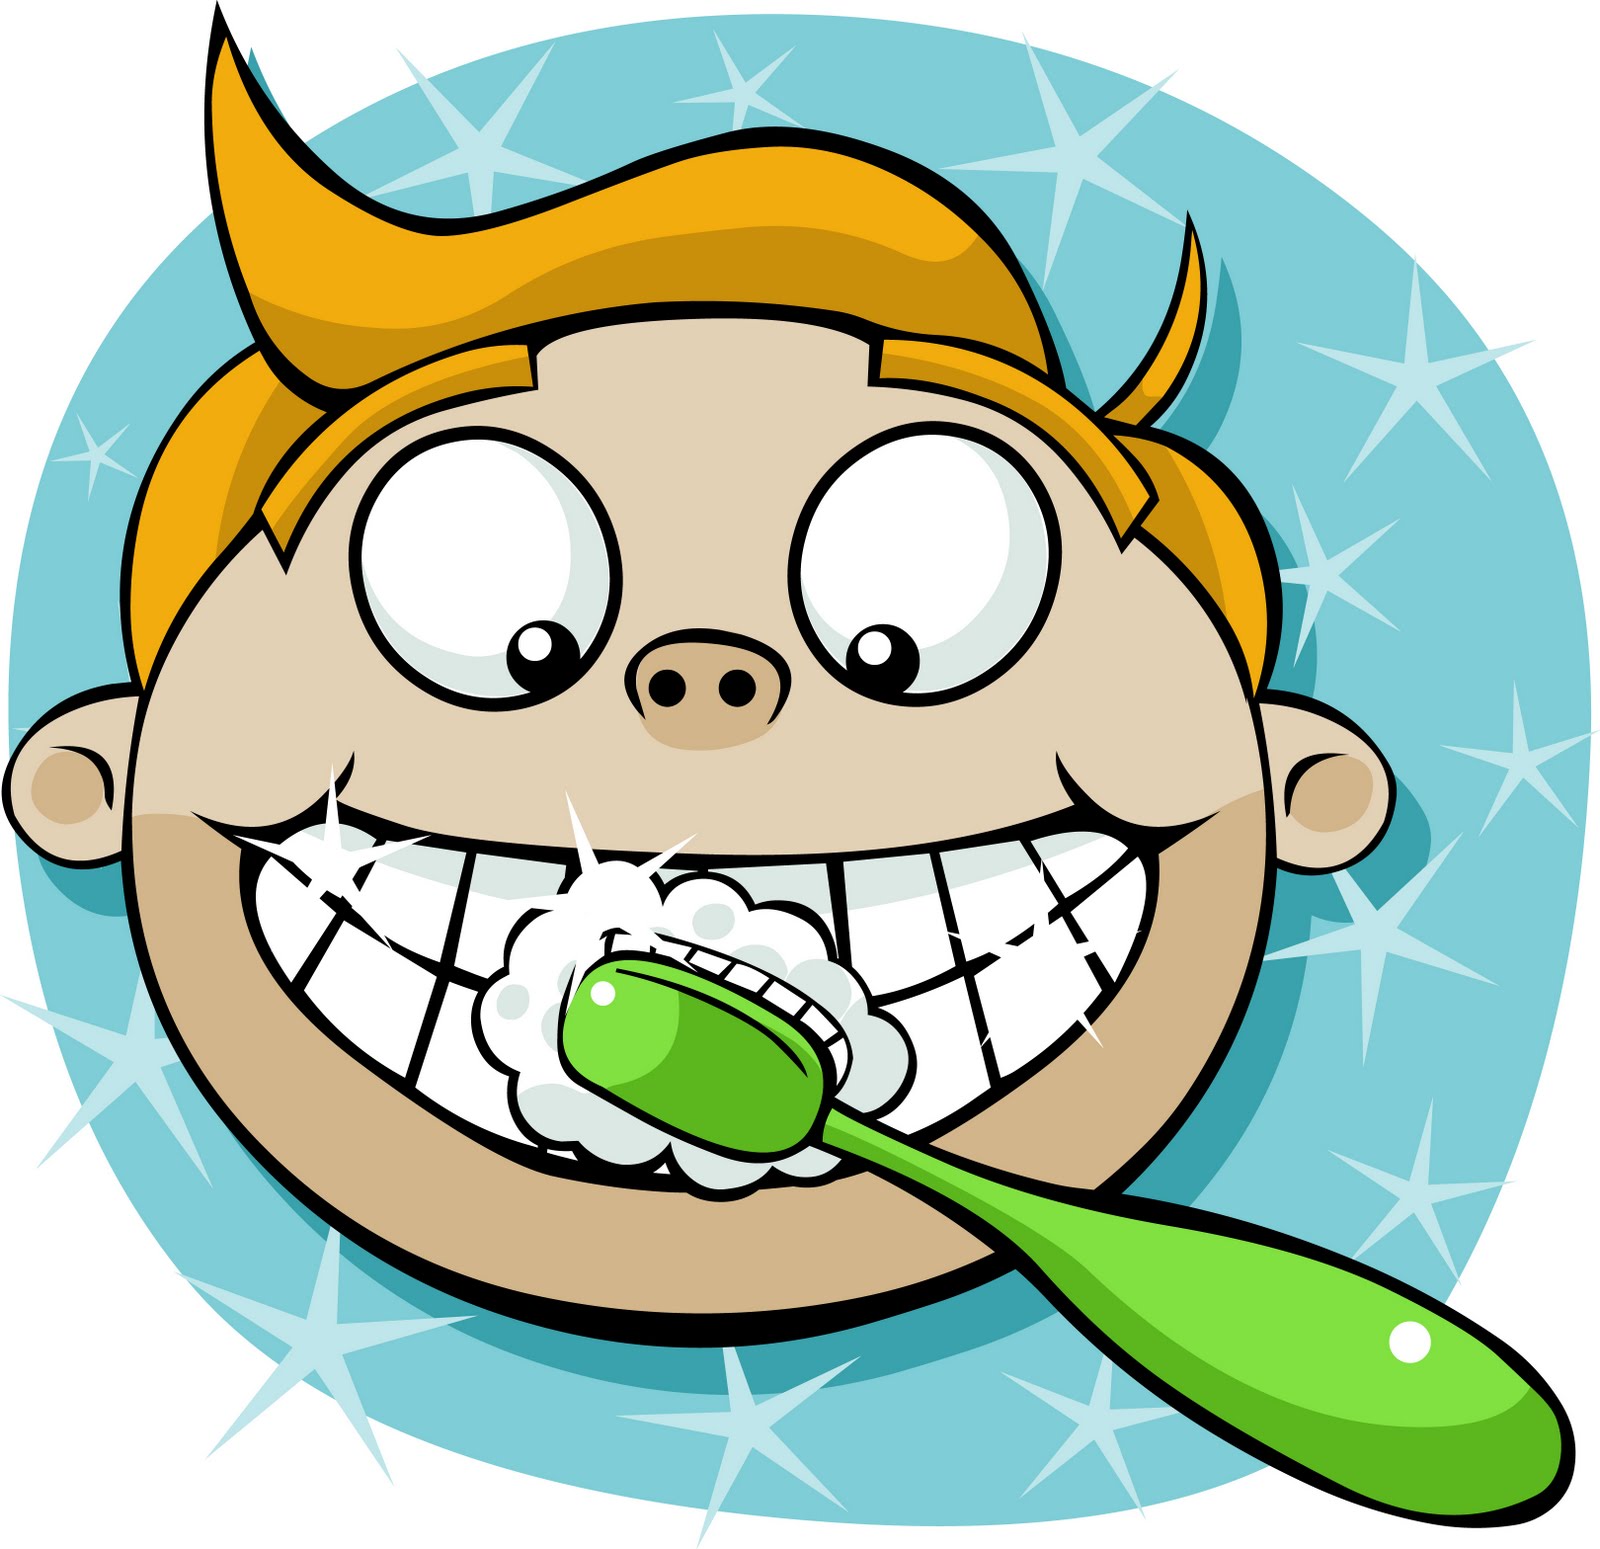 Brush teeth animated brushing teeth clip art danasrgd top image 